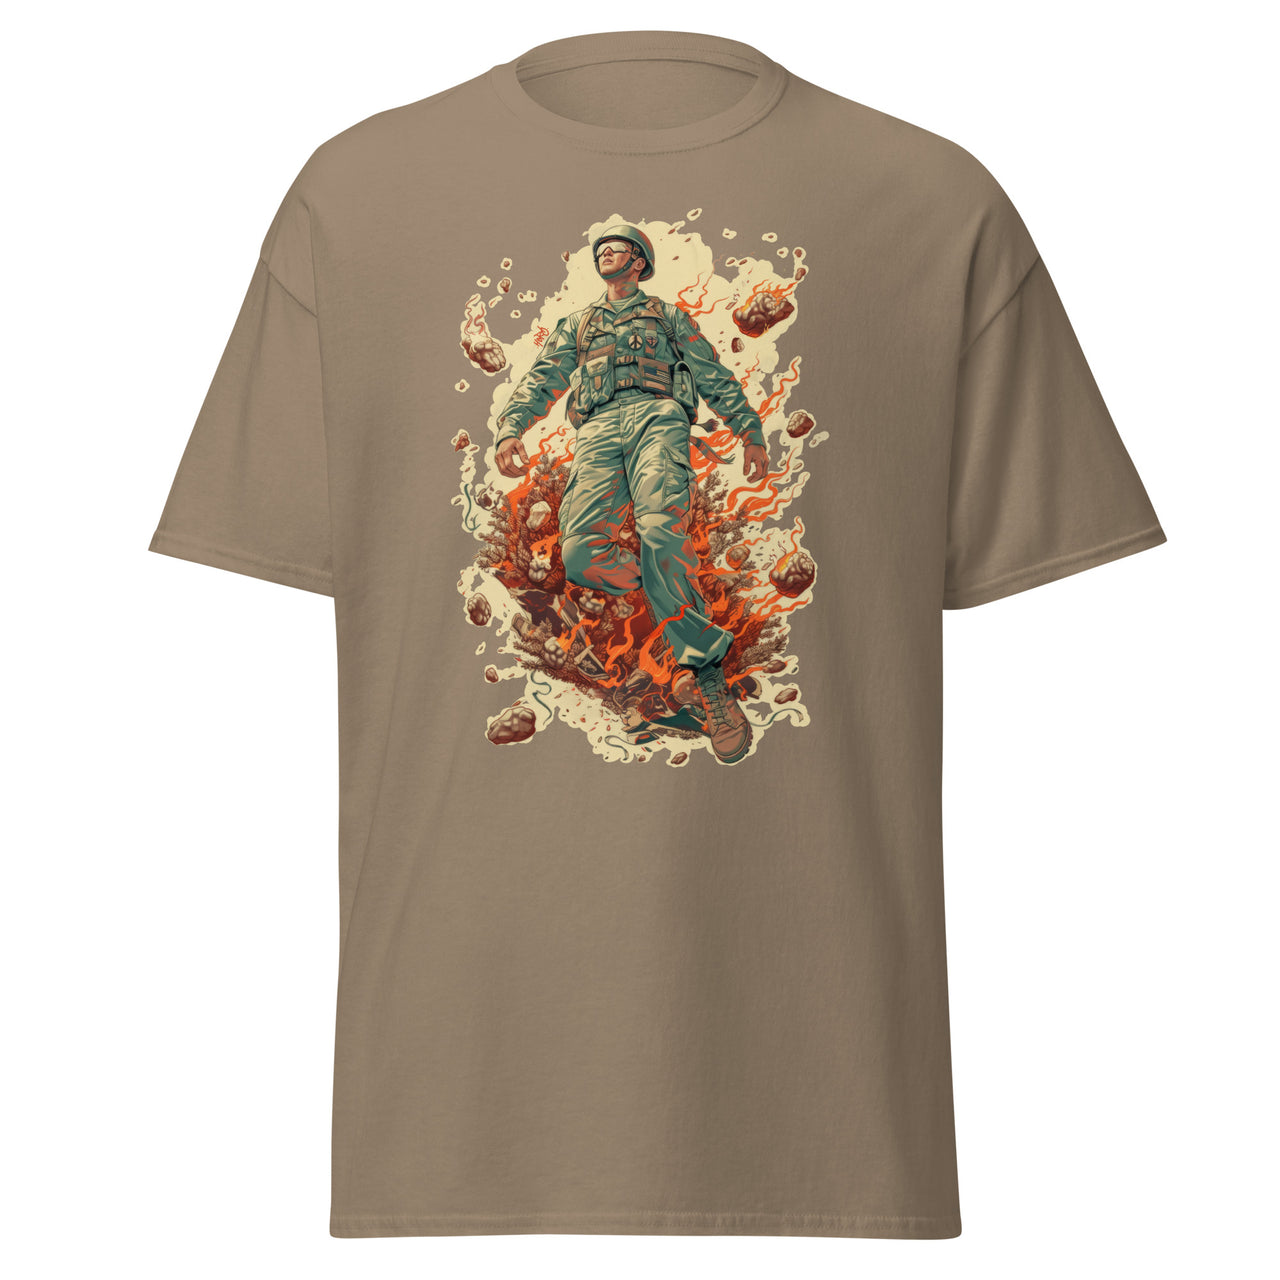 "A Man On Fire" Unisex Tee Shirt. - Studio Supreme OÜ